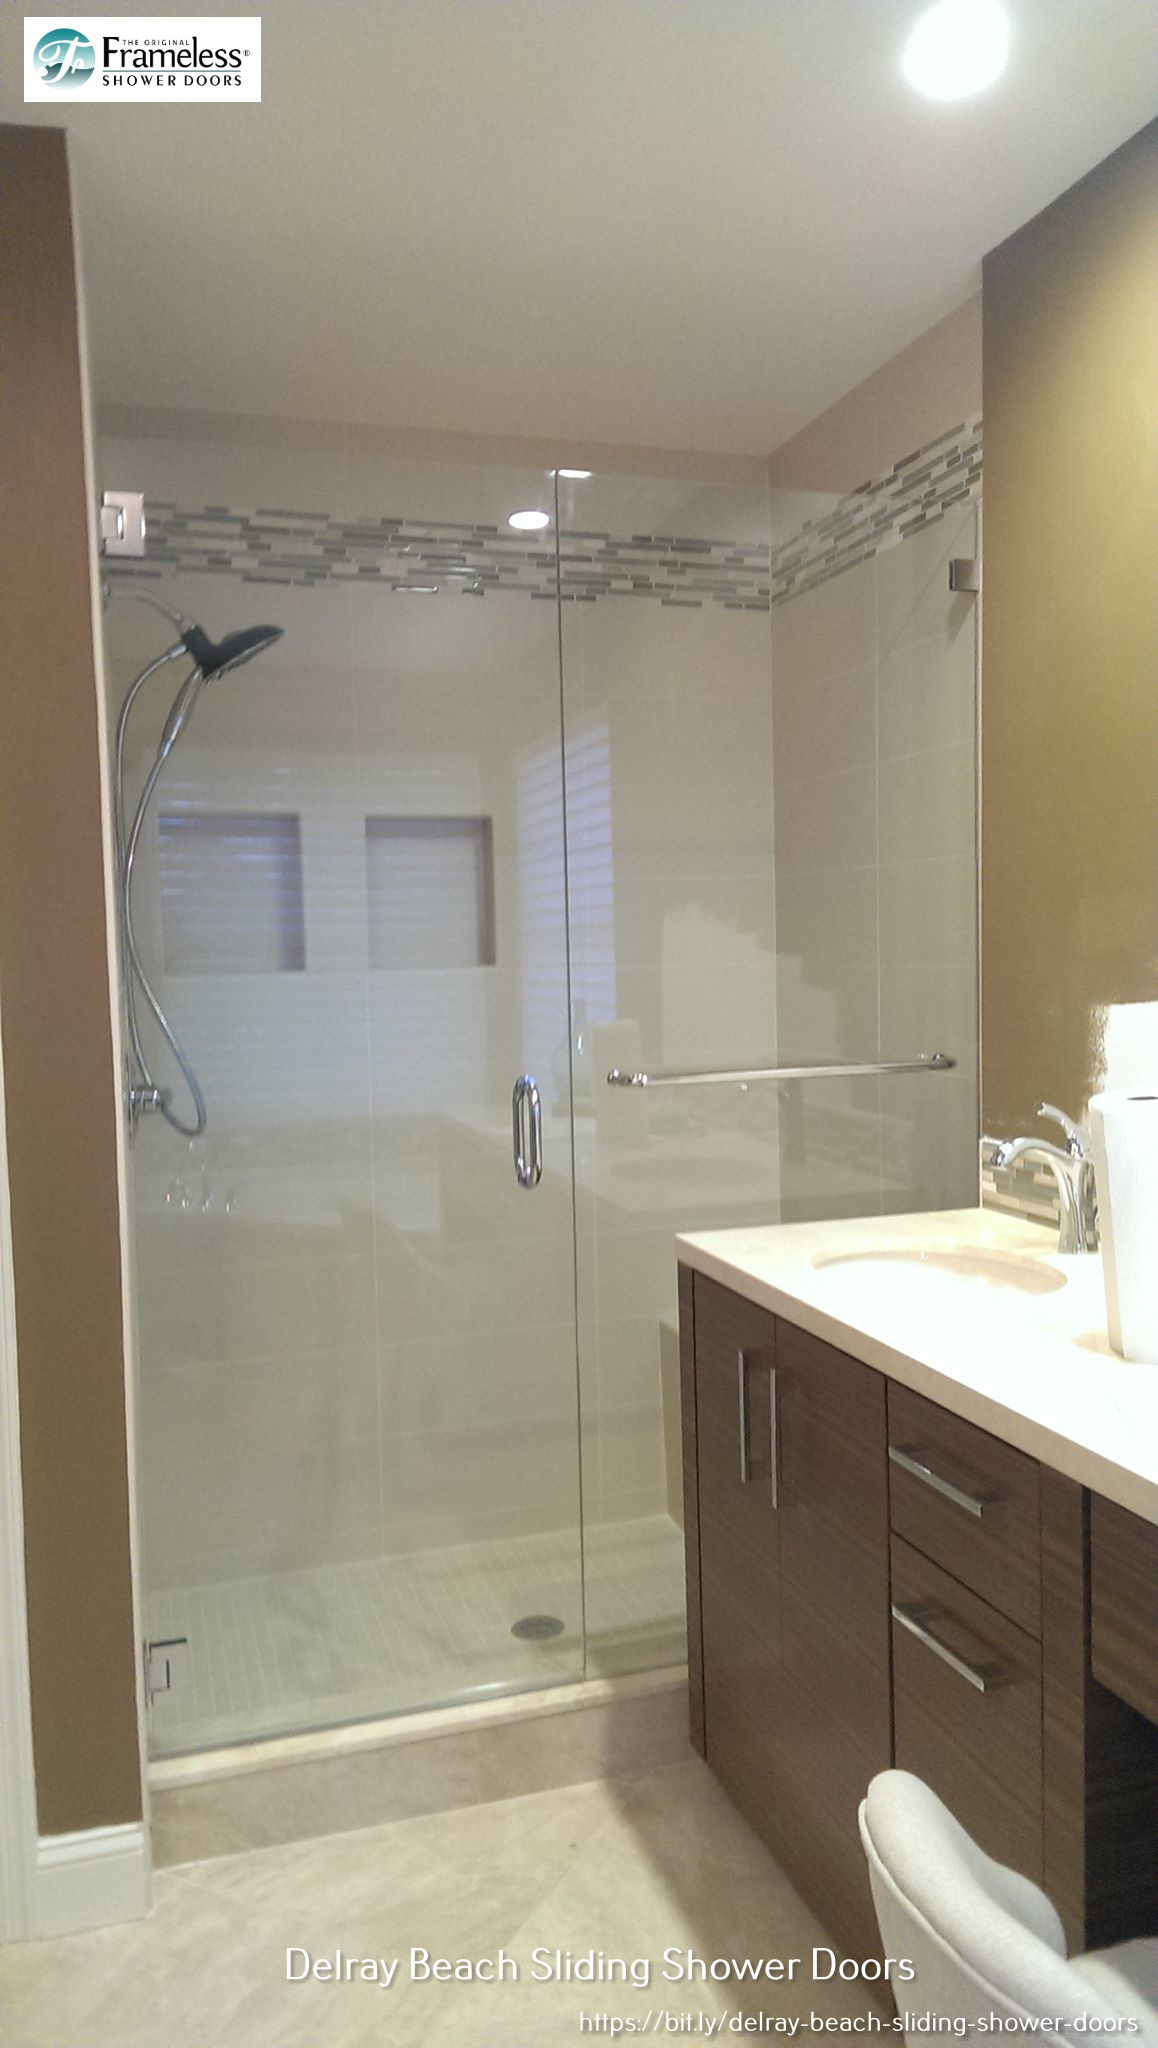 The Original Frameless Shower Doors Explains Why Hiring a Professional Shower Door Installer Is Essential